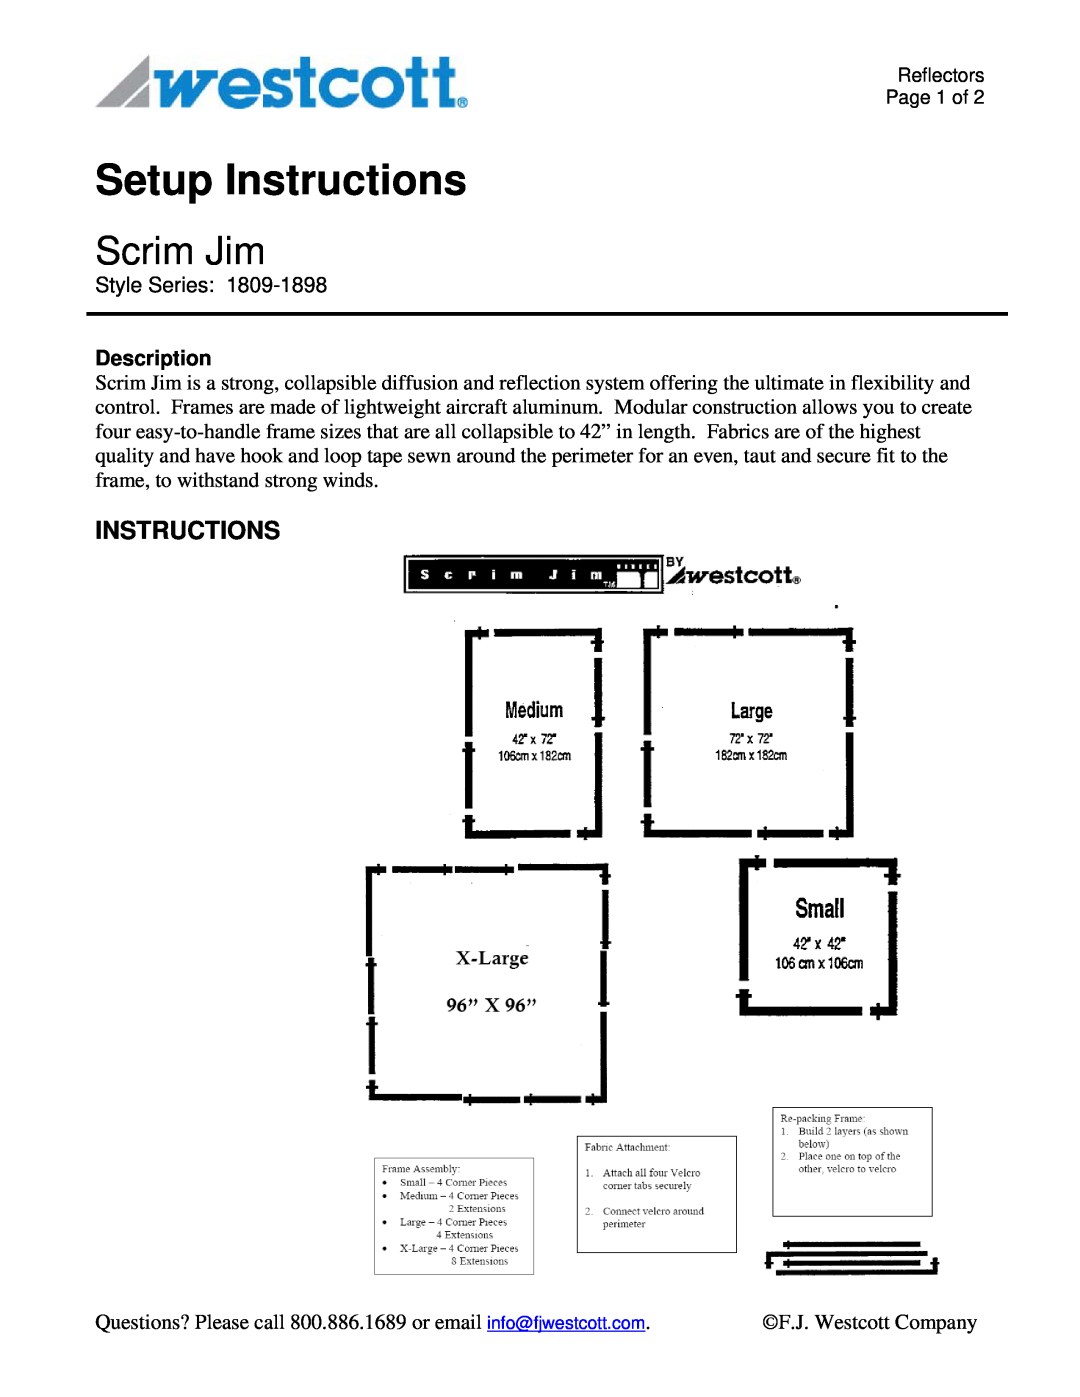 Westcott 1876 manual Setup Instructions, Scrim Jim, Description 